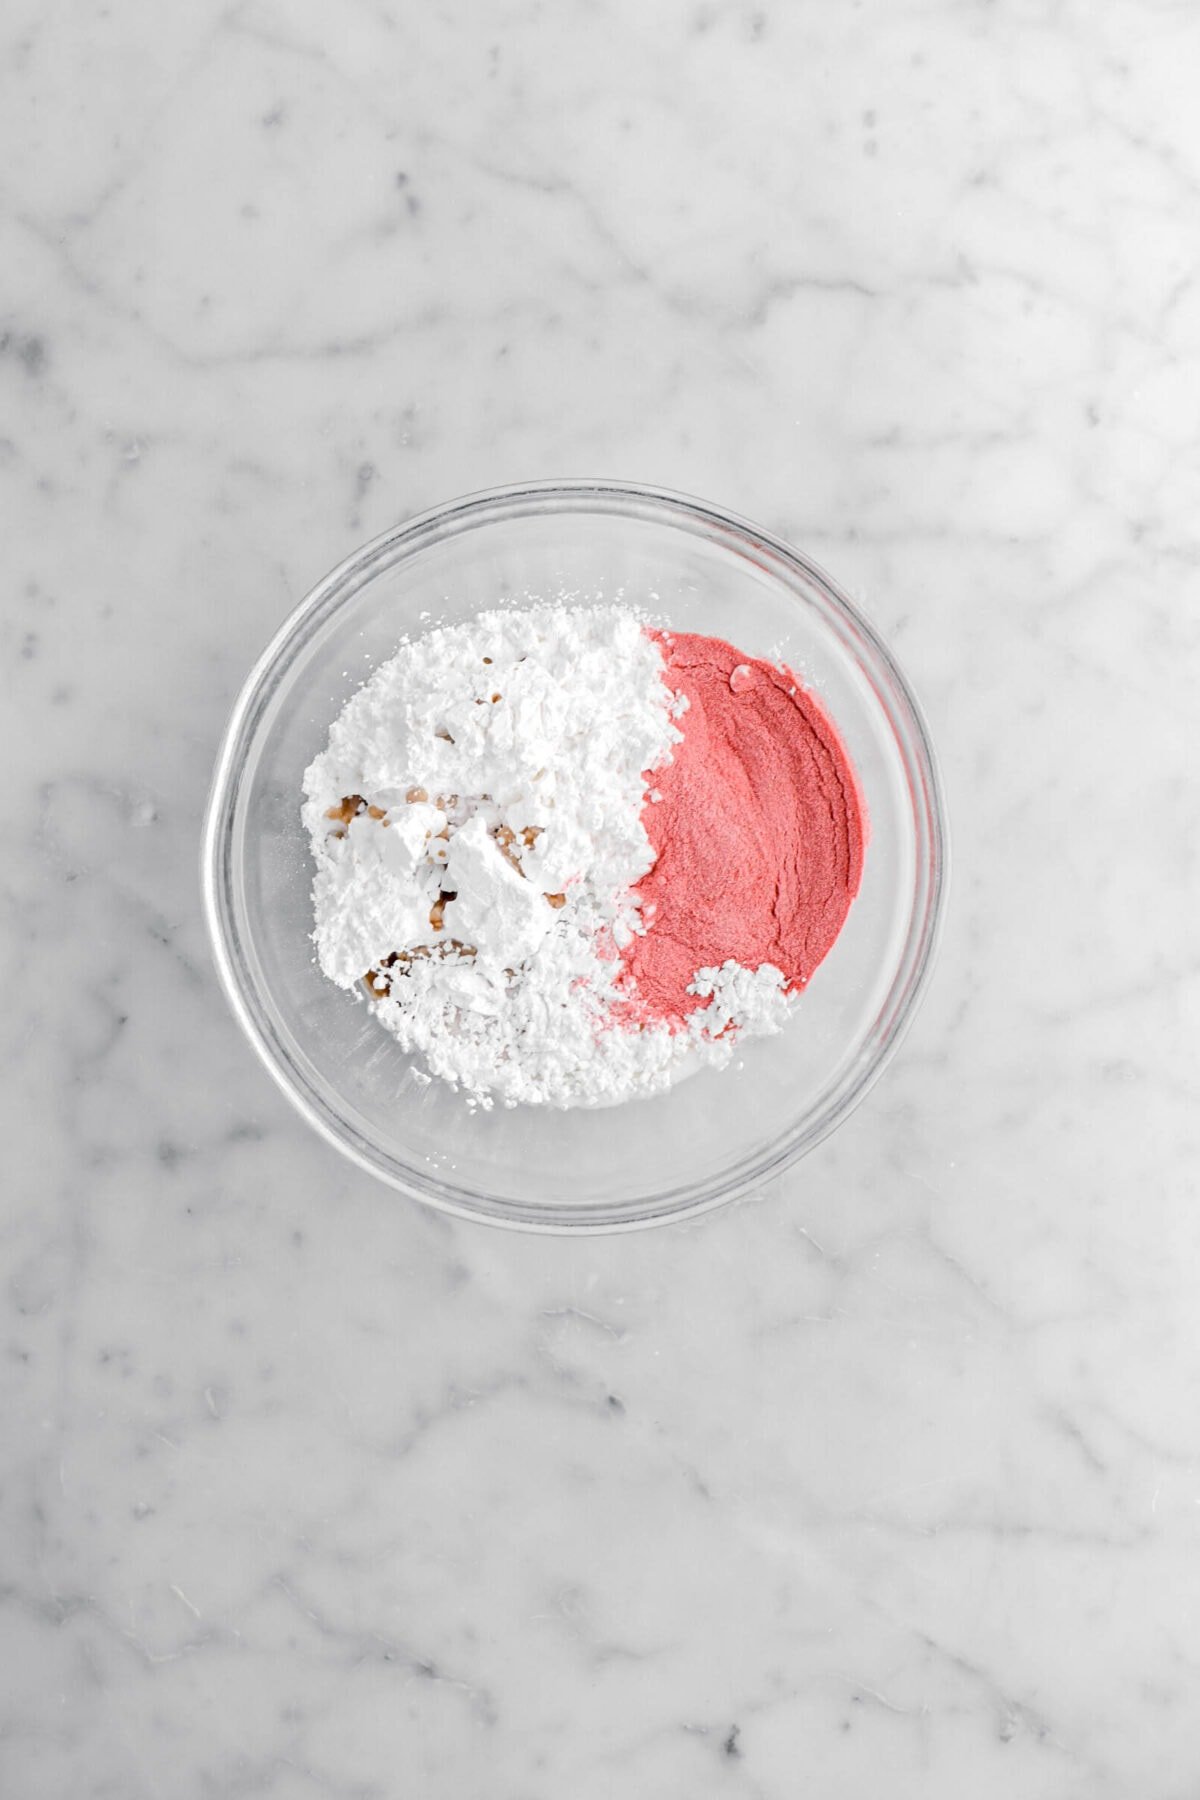 strawberry powder, milk, vanilla, and powdered sugar in glass bowl.